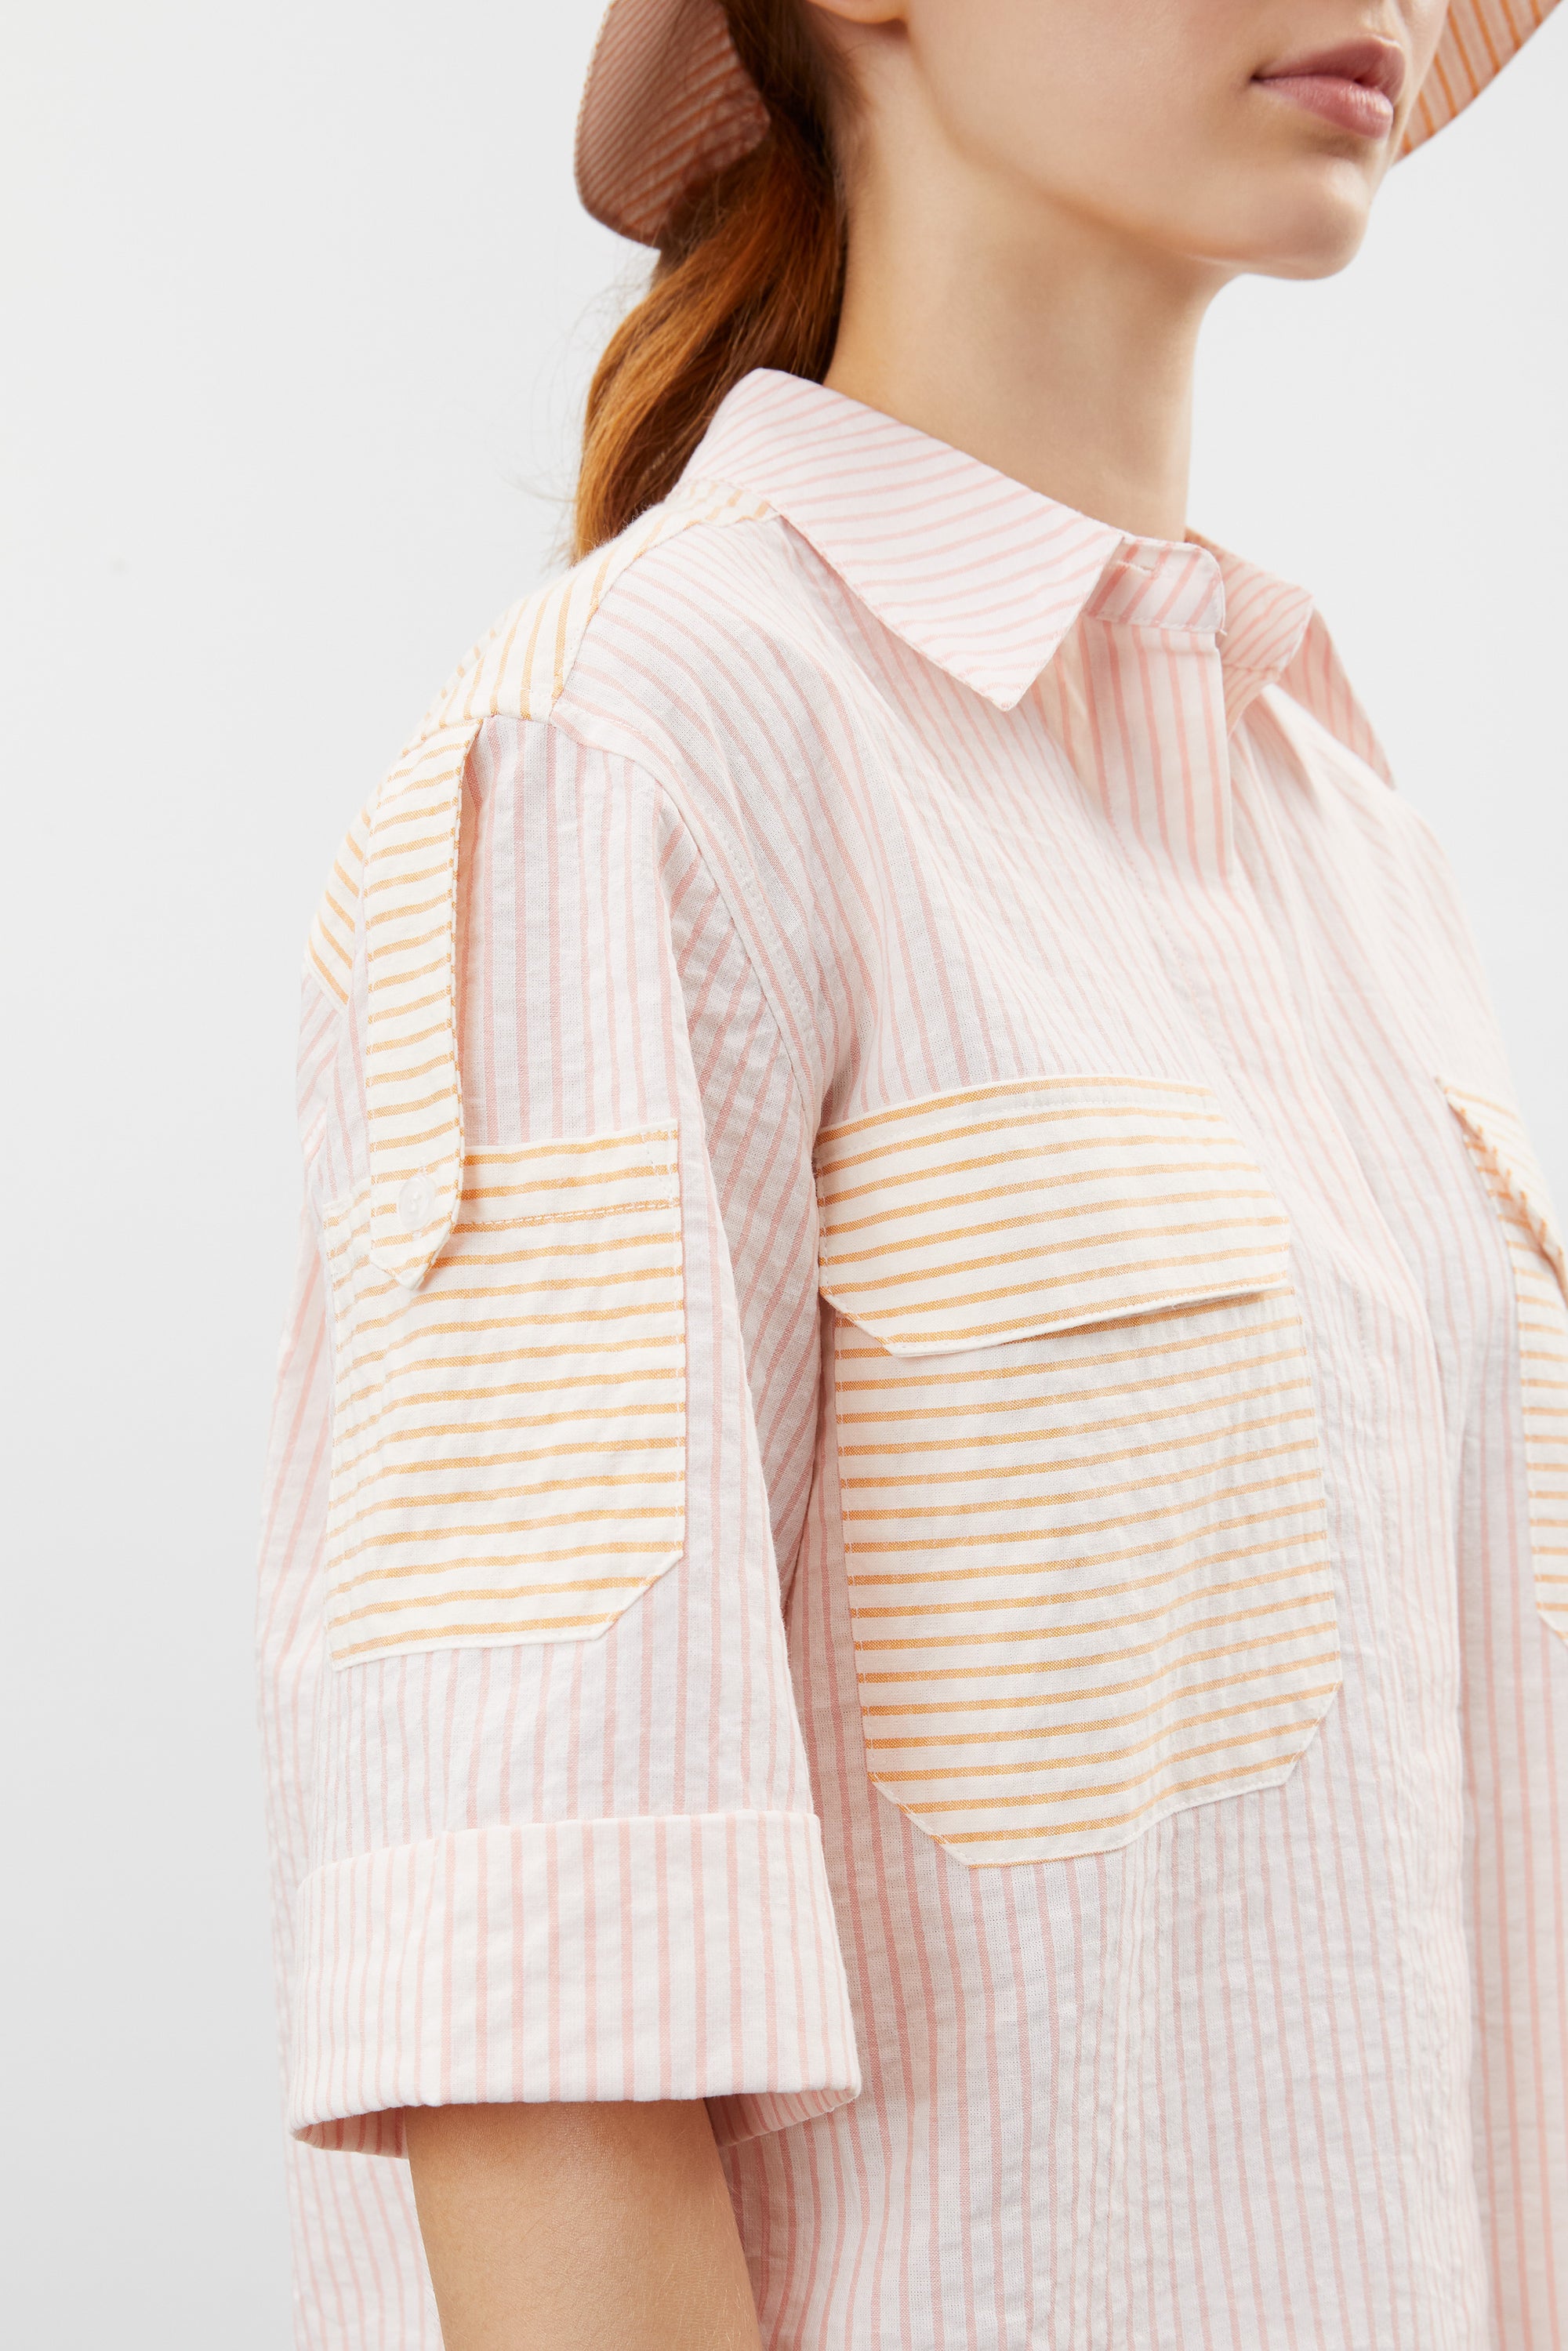 nué notes Finnegan Shirt - Multi Stripe SHIRTS 039 Multi Stripe